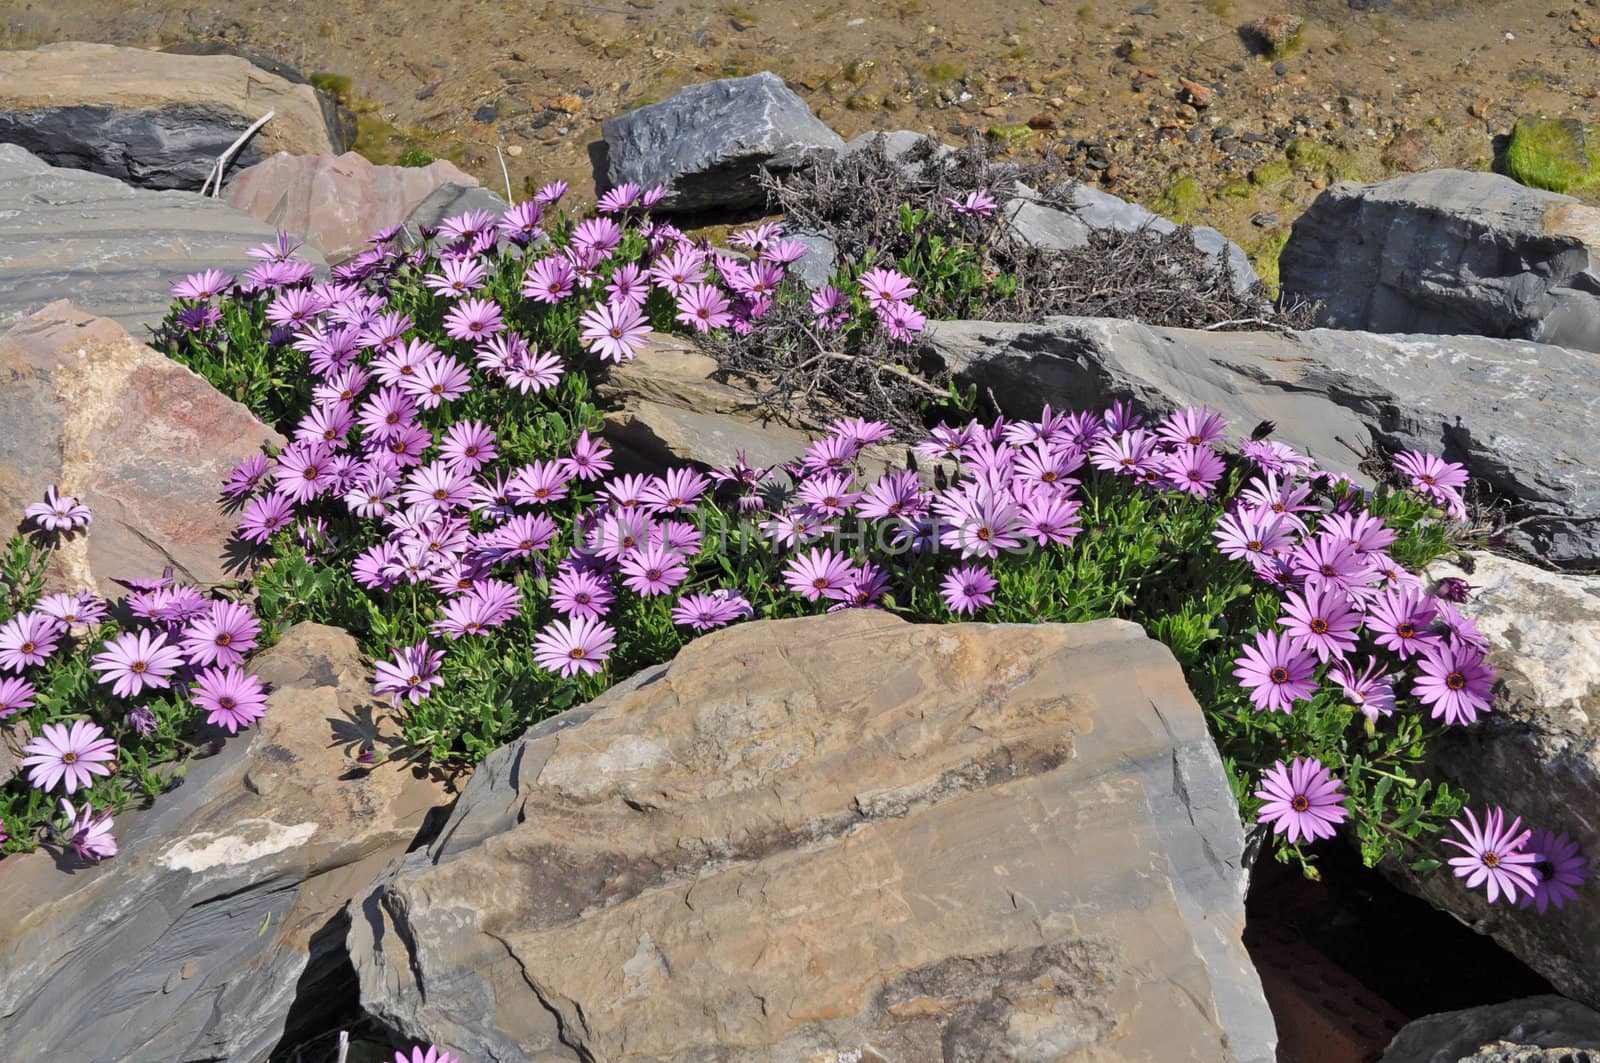 Violet spring flowers on the stone by dimkadimon